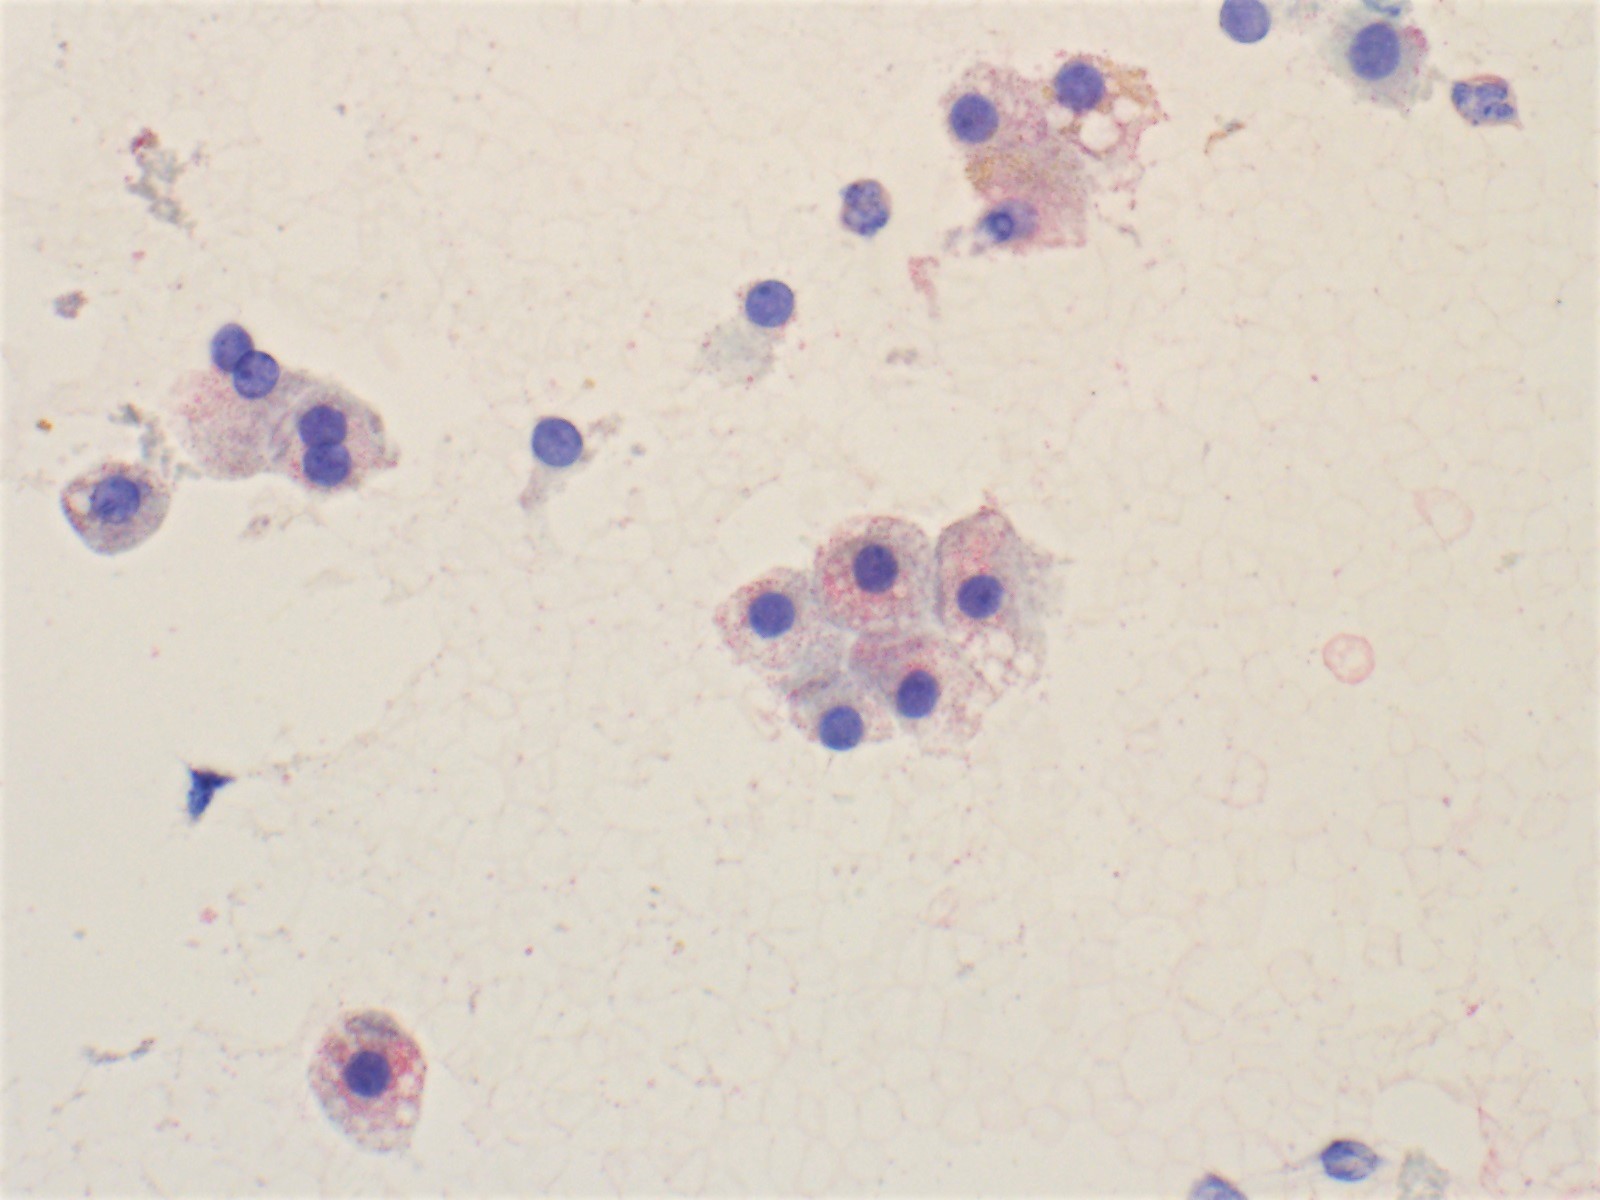 Benign hepatocytes, Pap